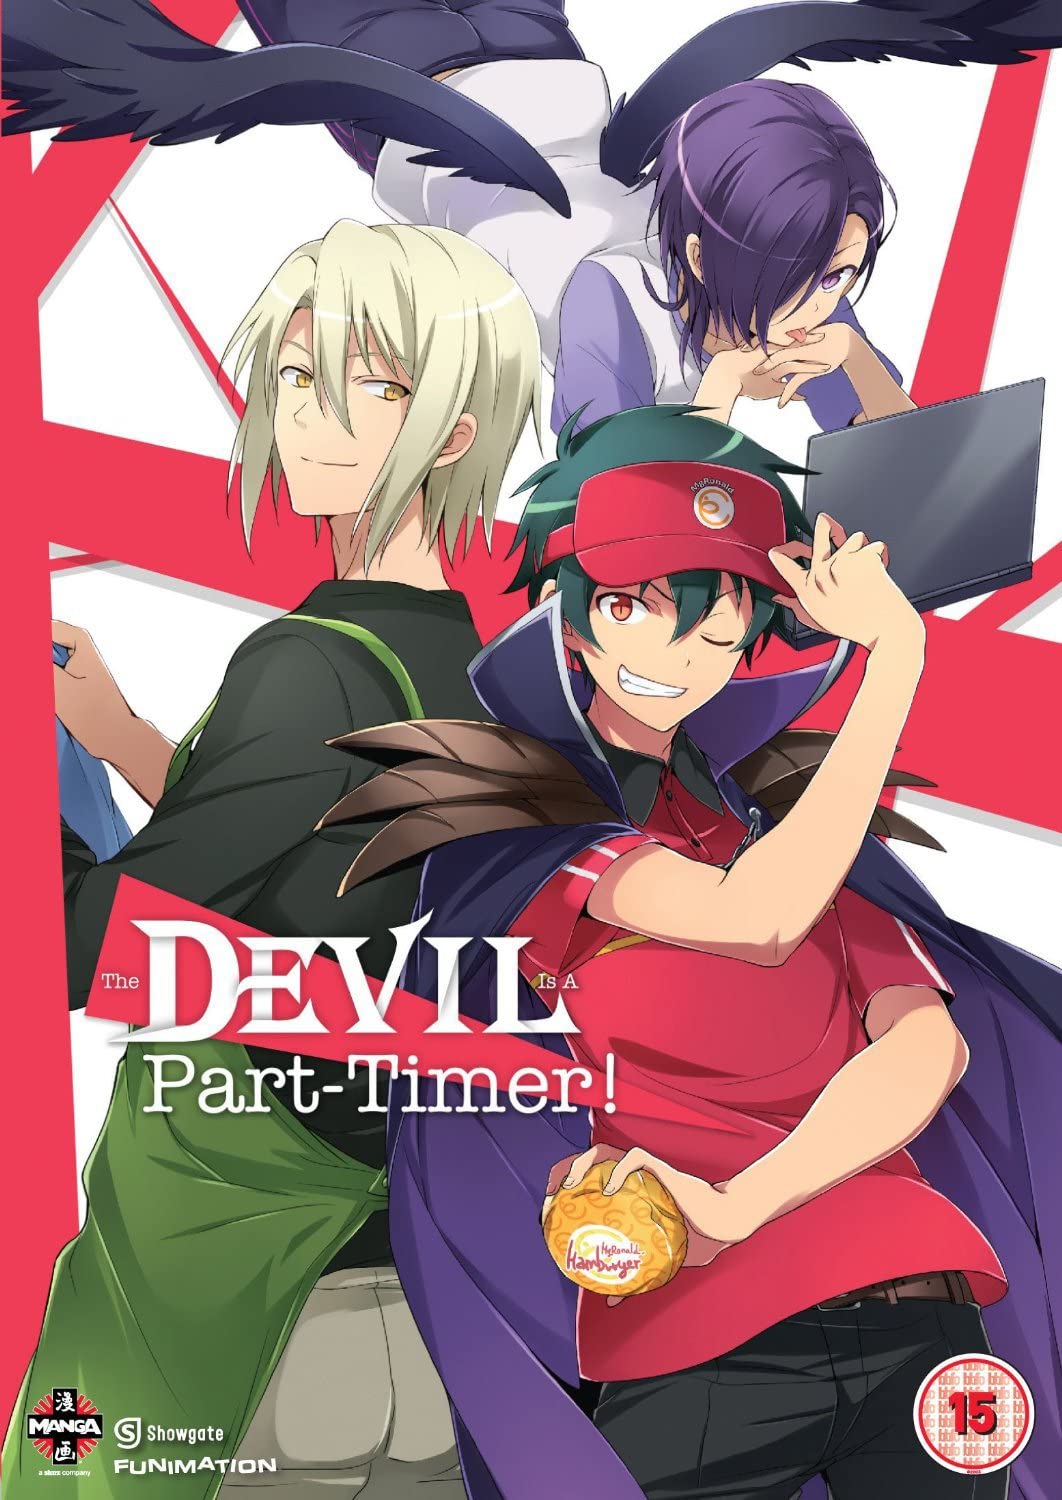 □ The Devil Is A Part-timer □ [Alternate Ending Challenge